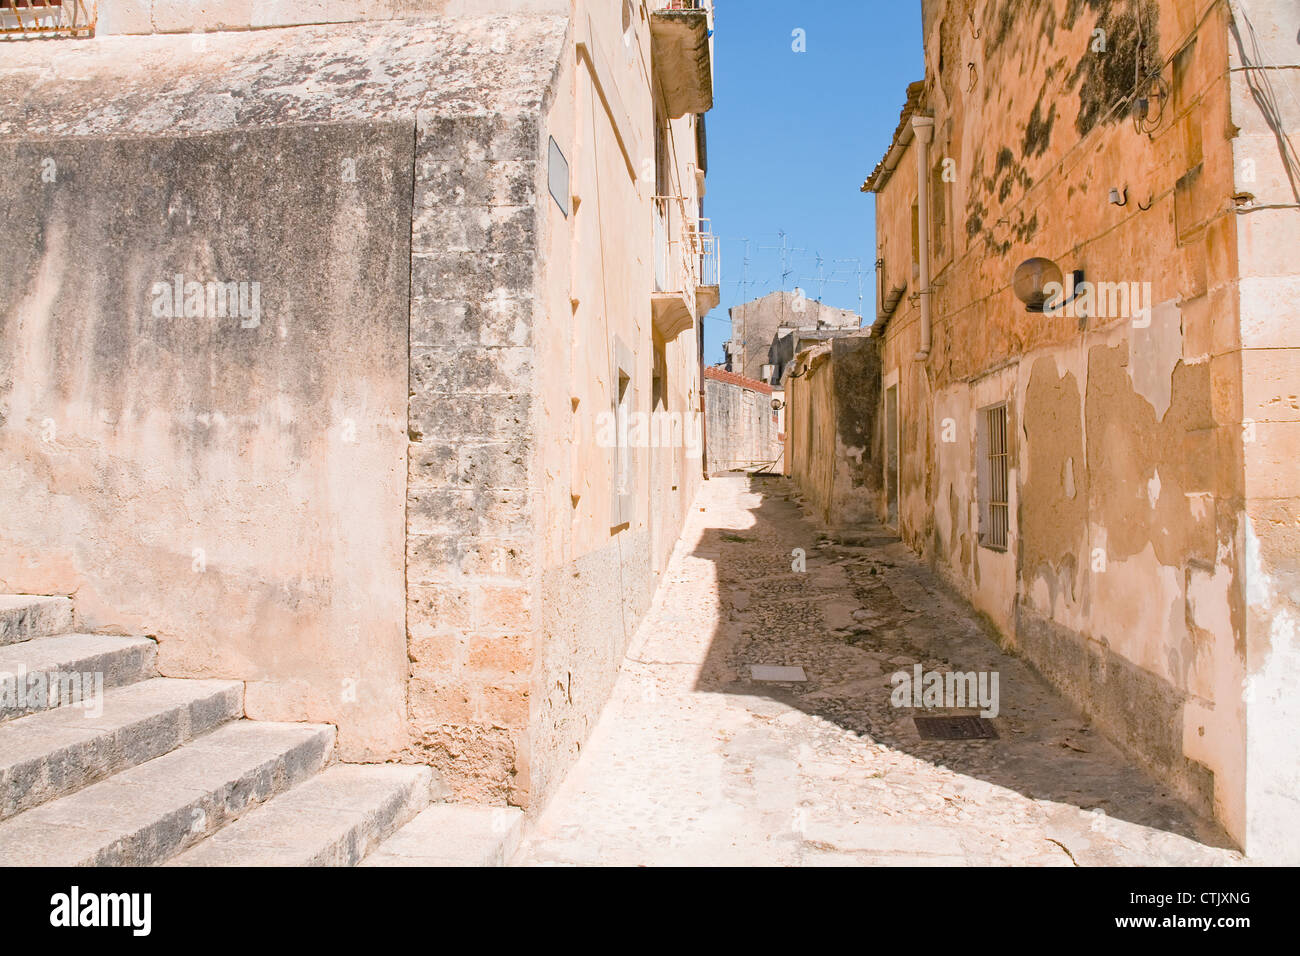 narrow street in baroque style town - Noto, Sicily Stock Photo